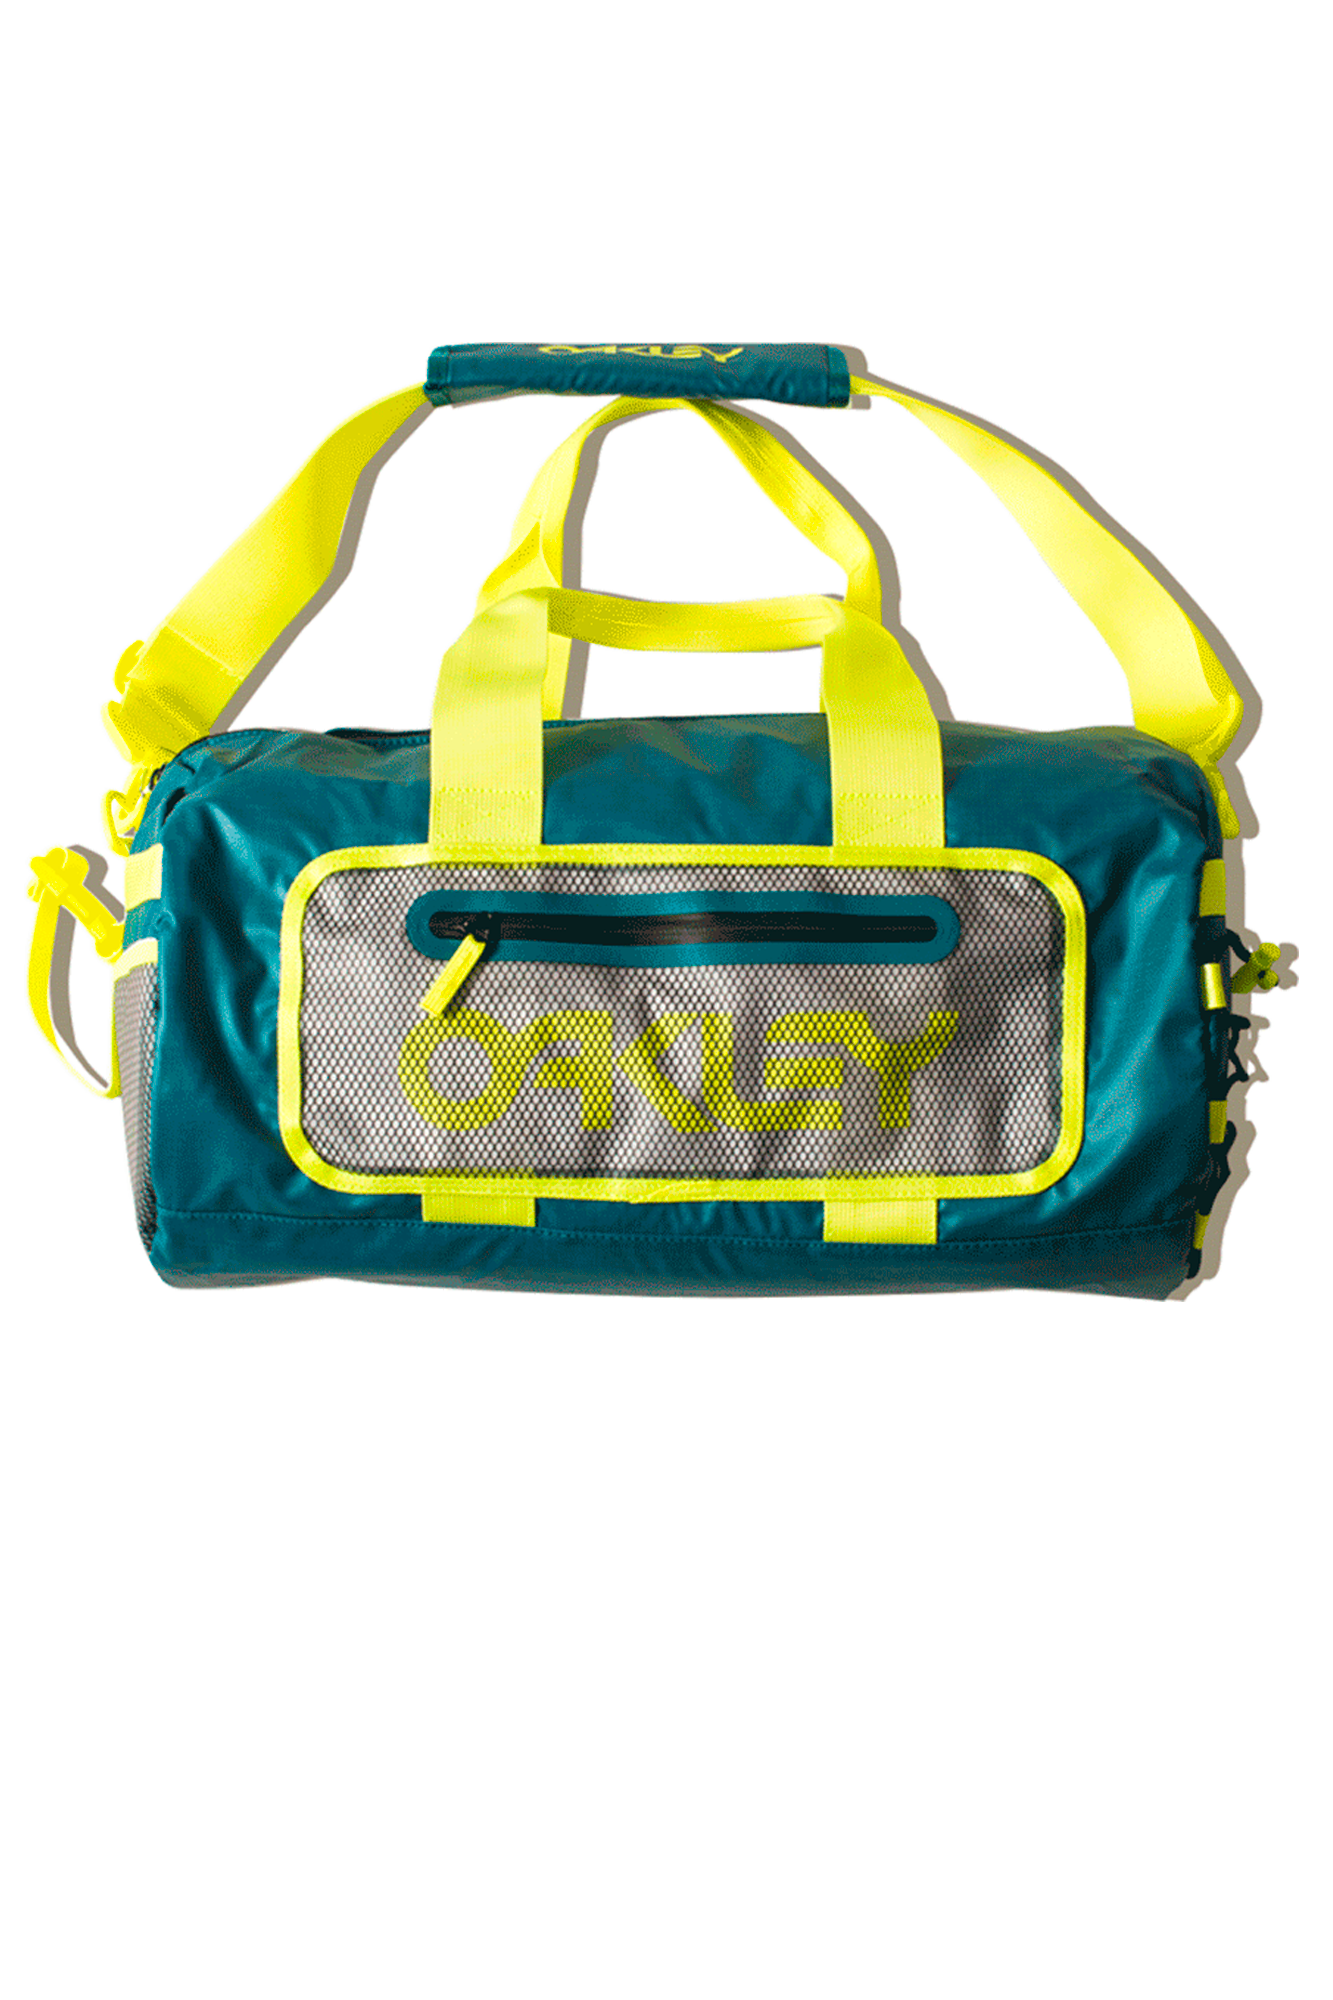 Oakley Duffle Bag 90's Small Duffle Bag Green 99508-9PE#000#C0013#OS - One Block Down